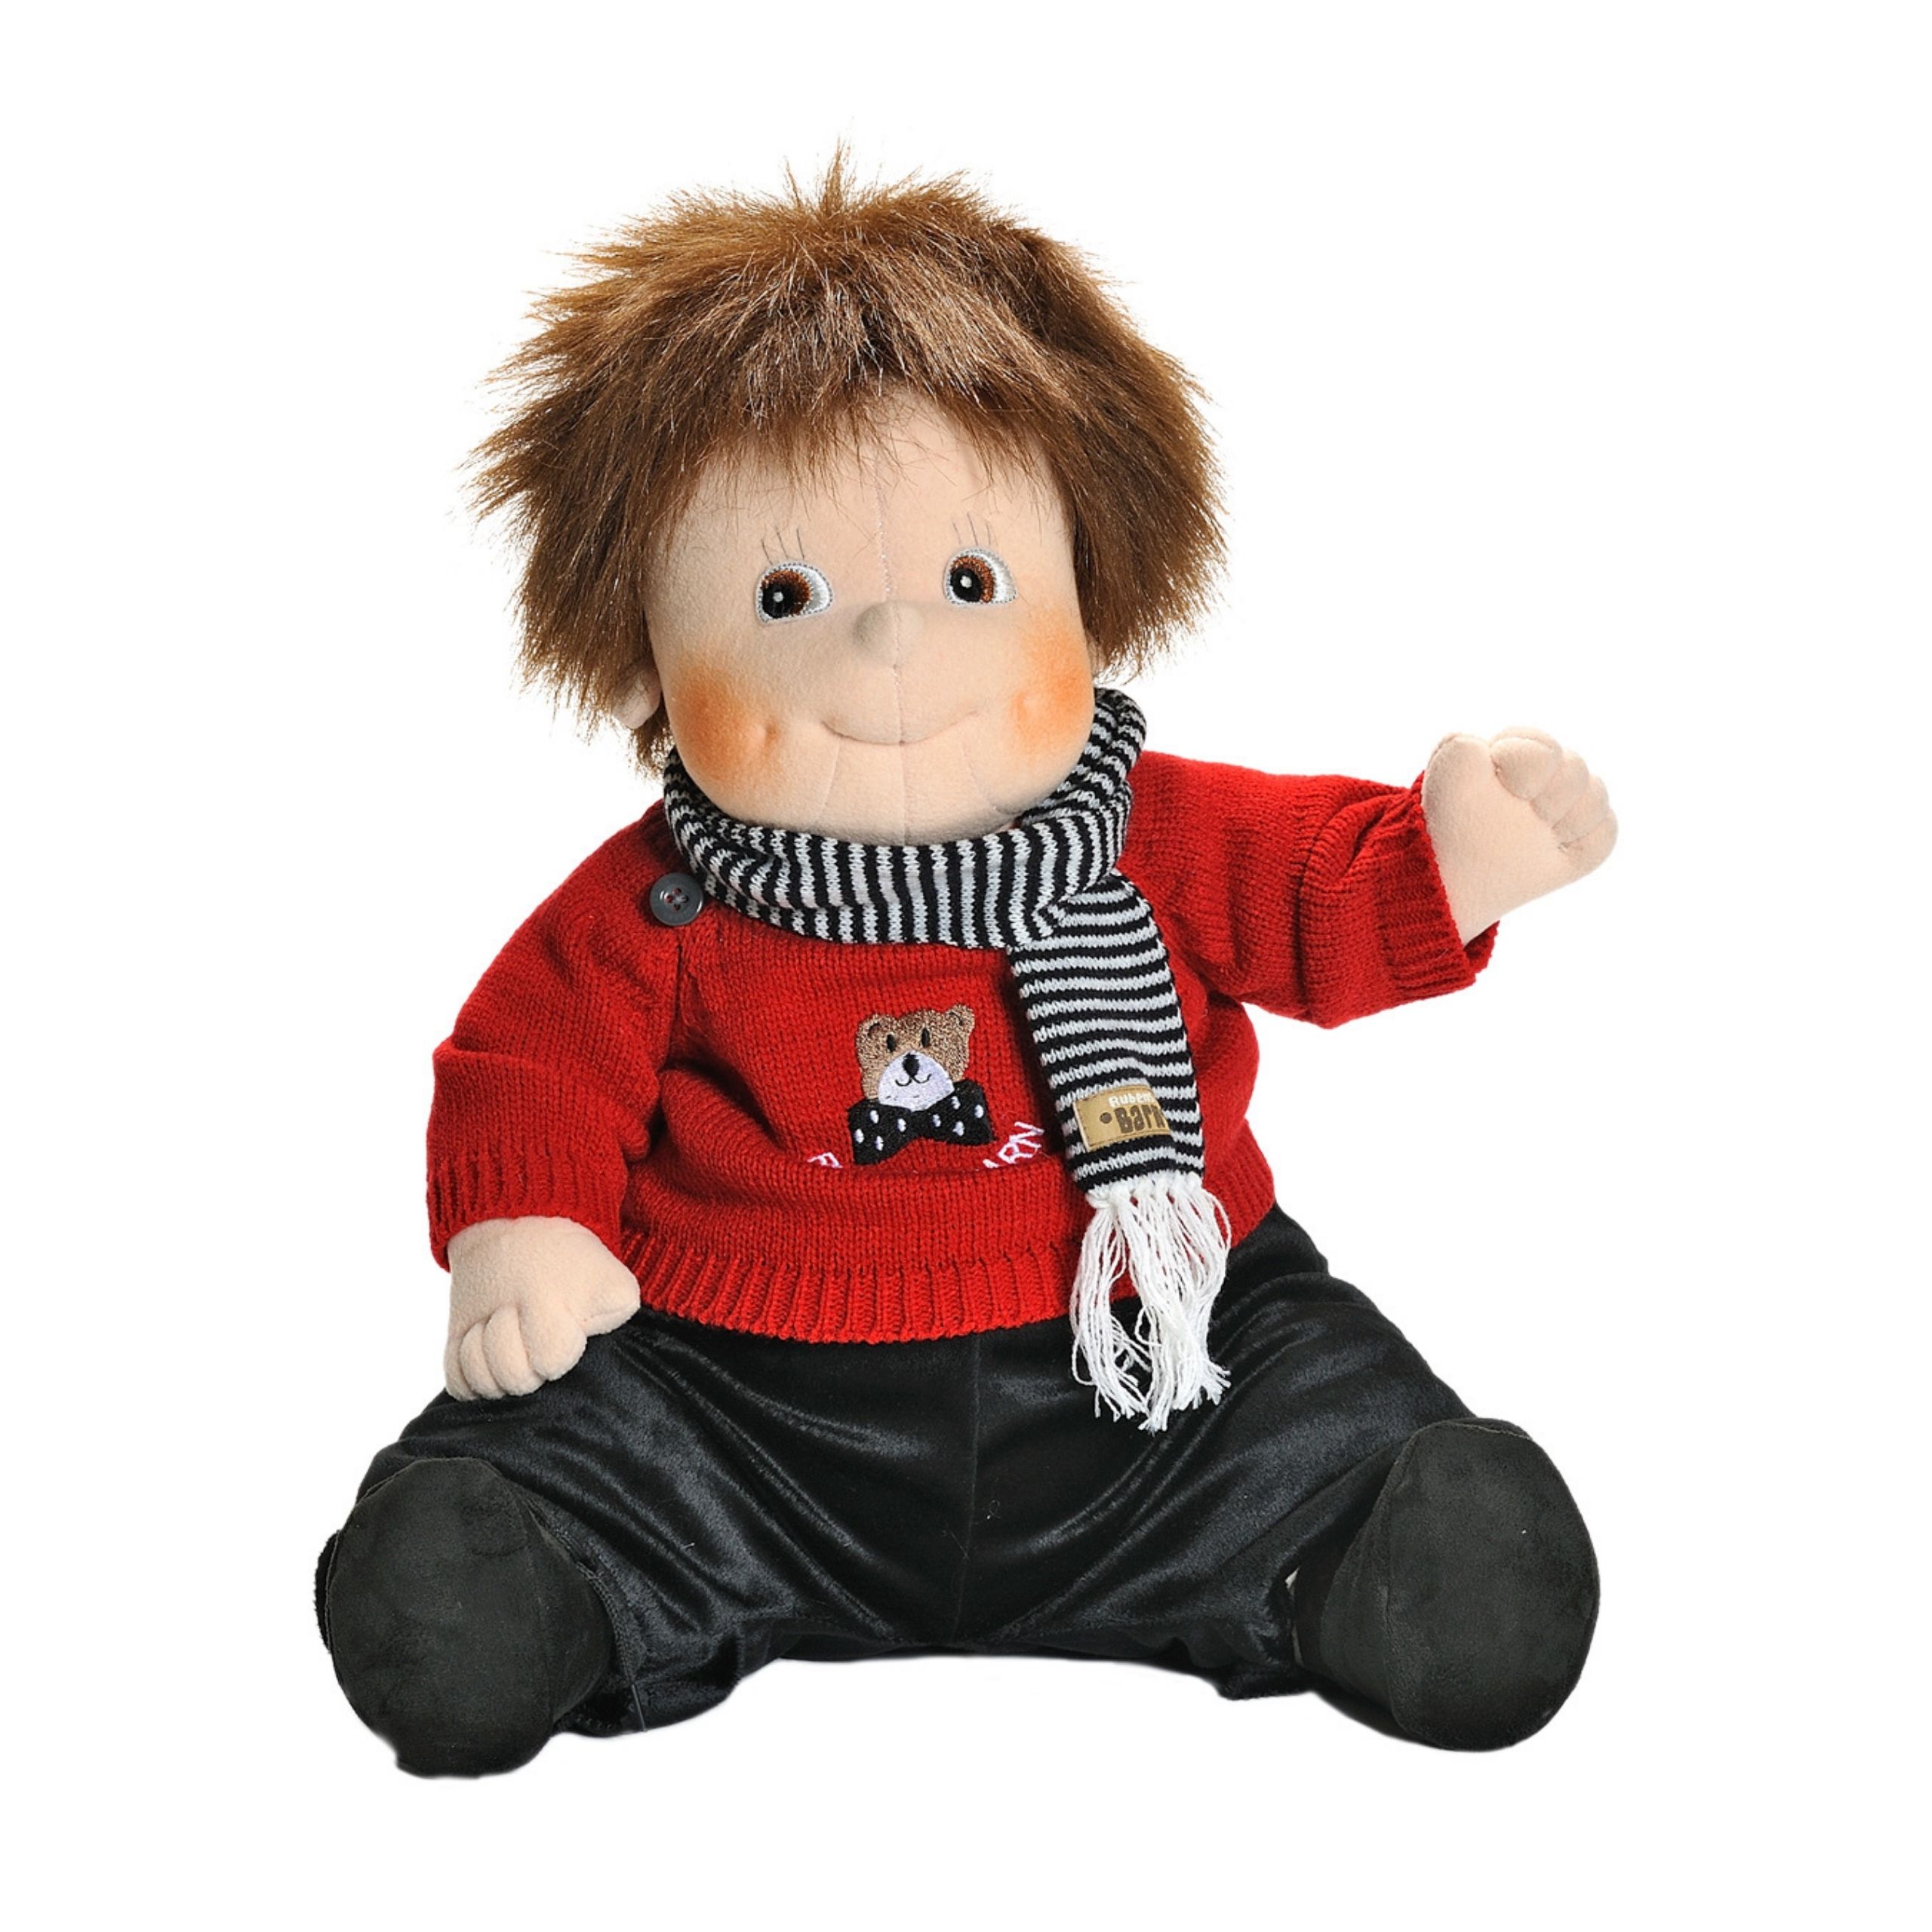 Puppen rubens barn weiche puppe emil teddy original